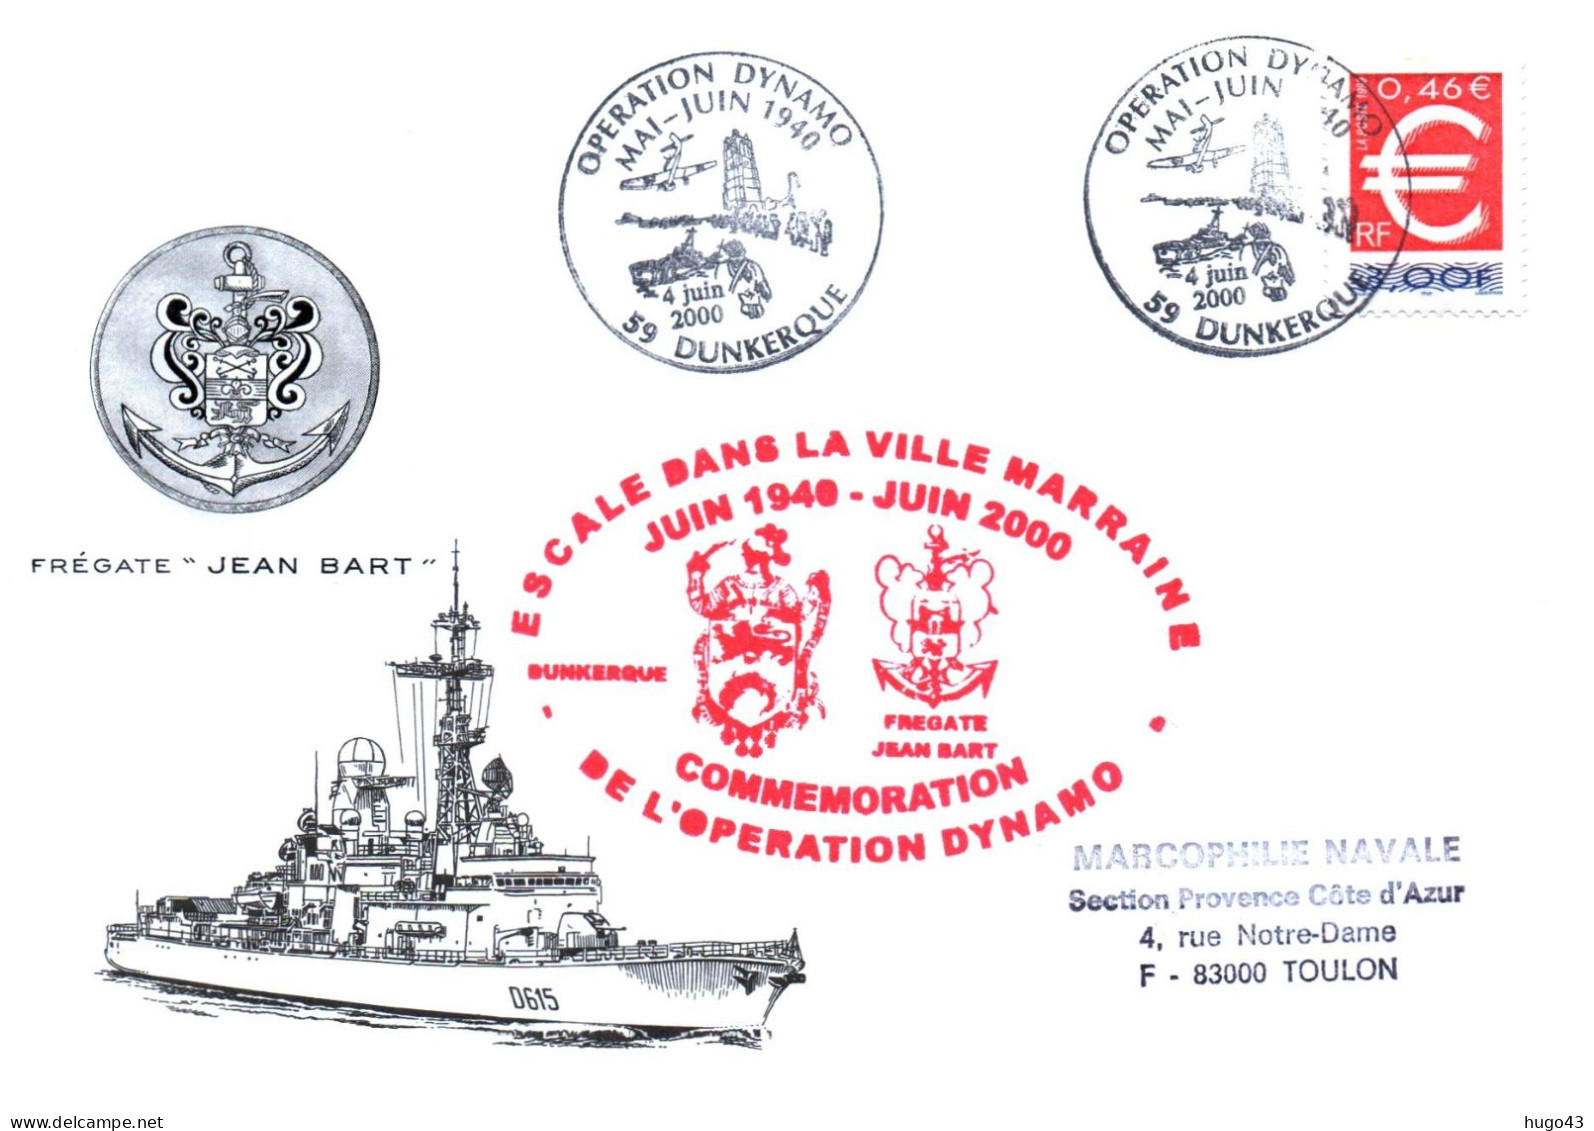 ENVELOPPE AVEC CACHET FREGATE JEAN BART - OPERATION DYNAMO JUIN 1940 / JUIN 2000 - DUNKERQUE LE 4/06/2000 - Naval Post